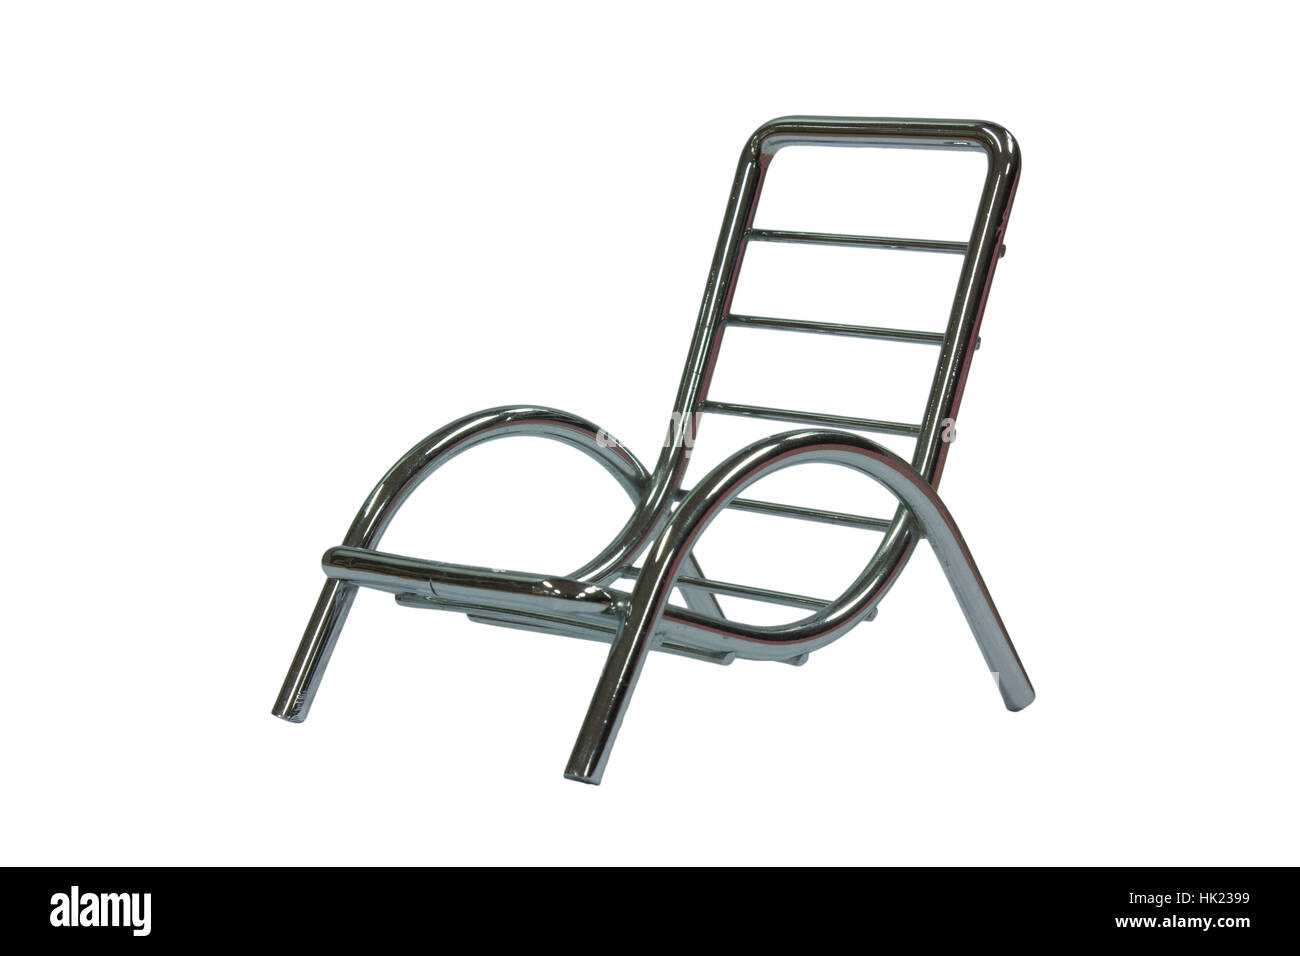 Clean Look Metalic Modern Chair Stock Photo